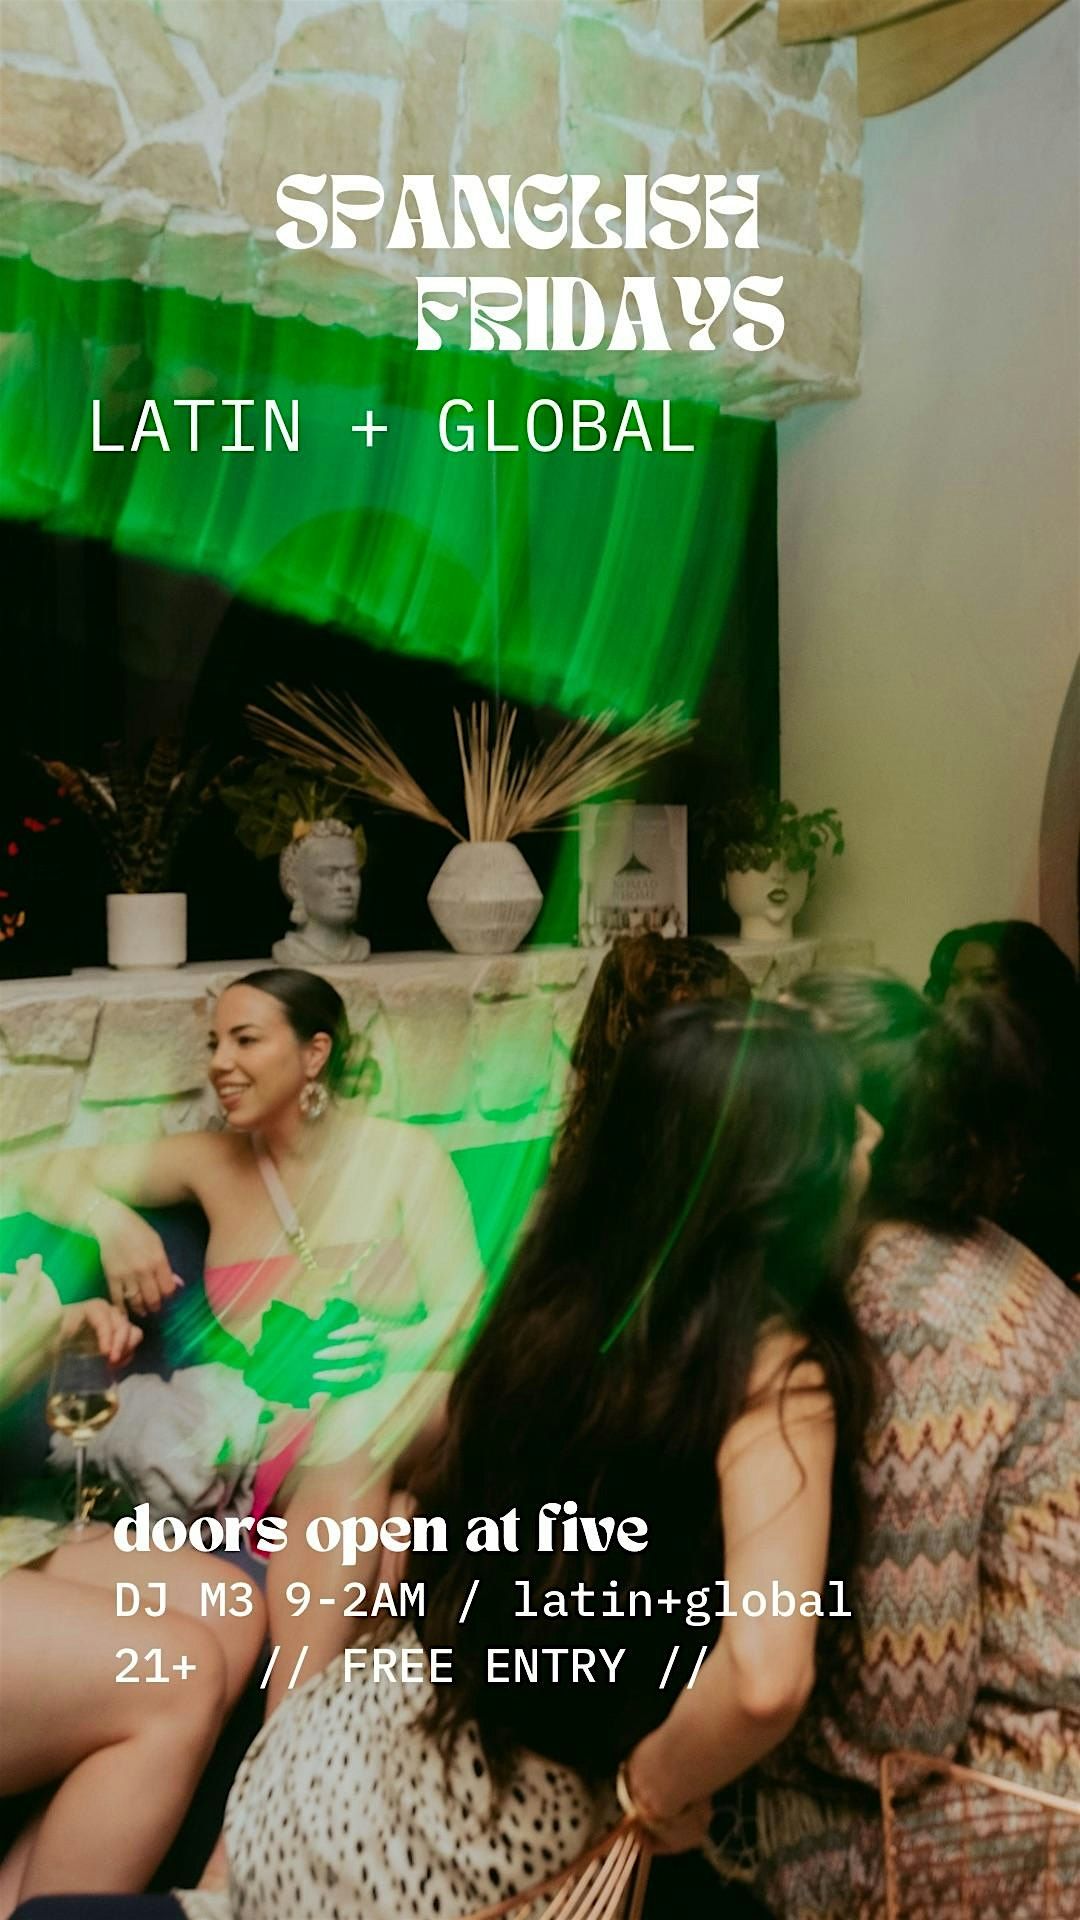 SPANGLISH FRIDAYS: The Latin + Global Dance Party